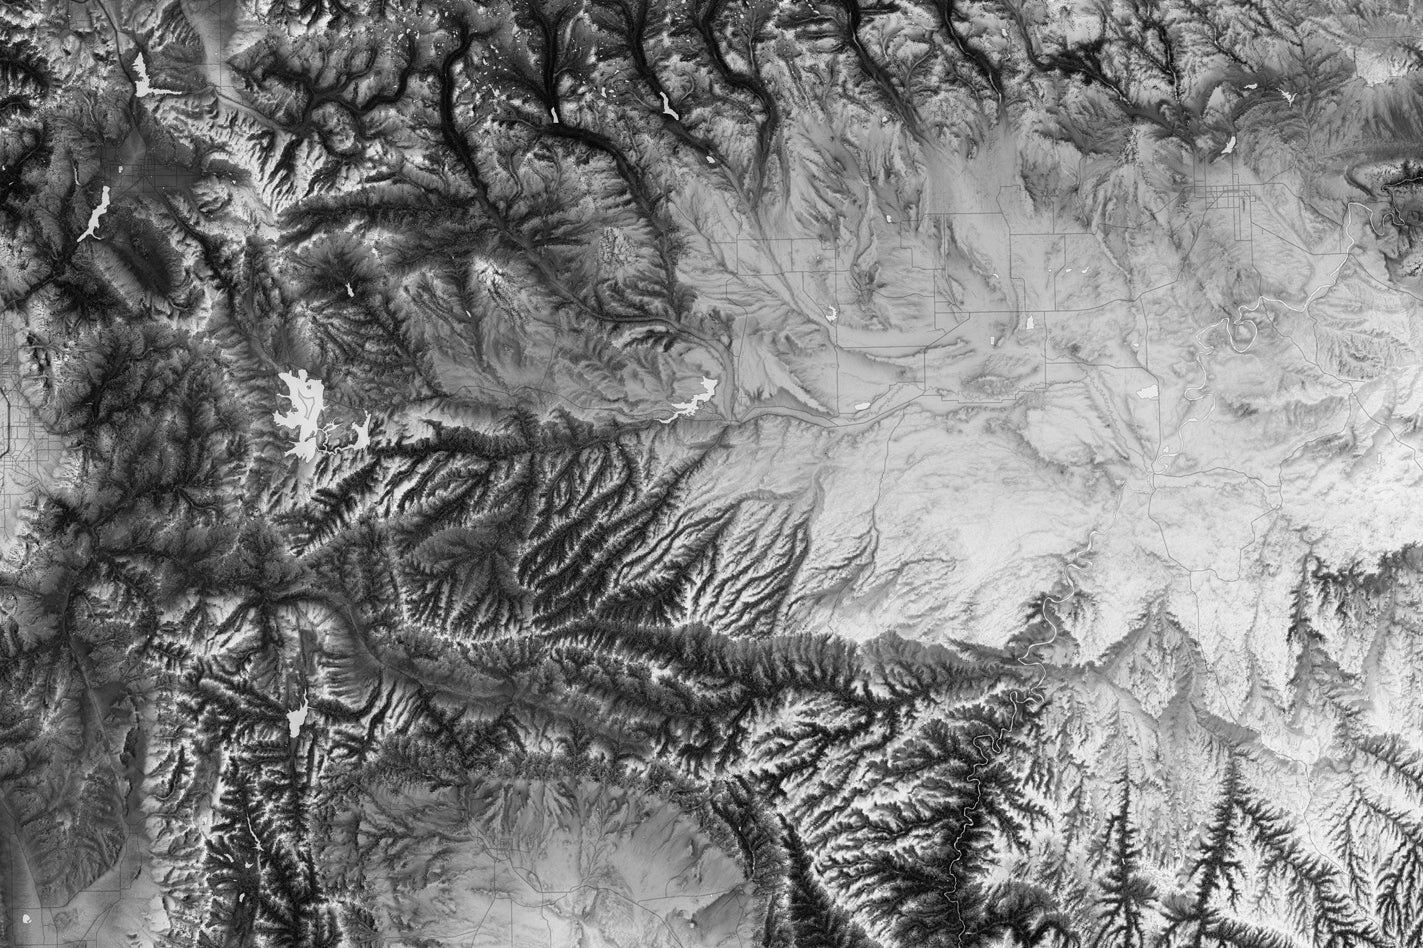 Detailed topography of uinta basin, utah